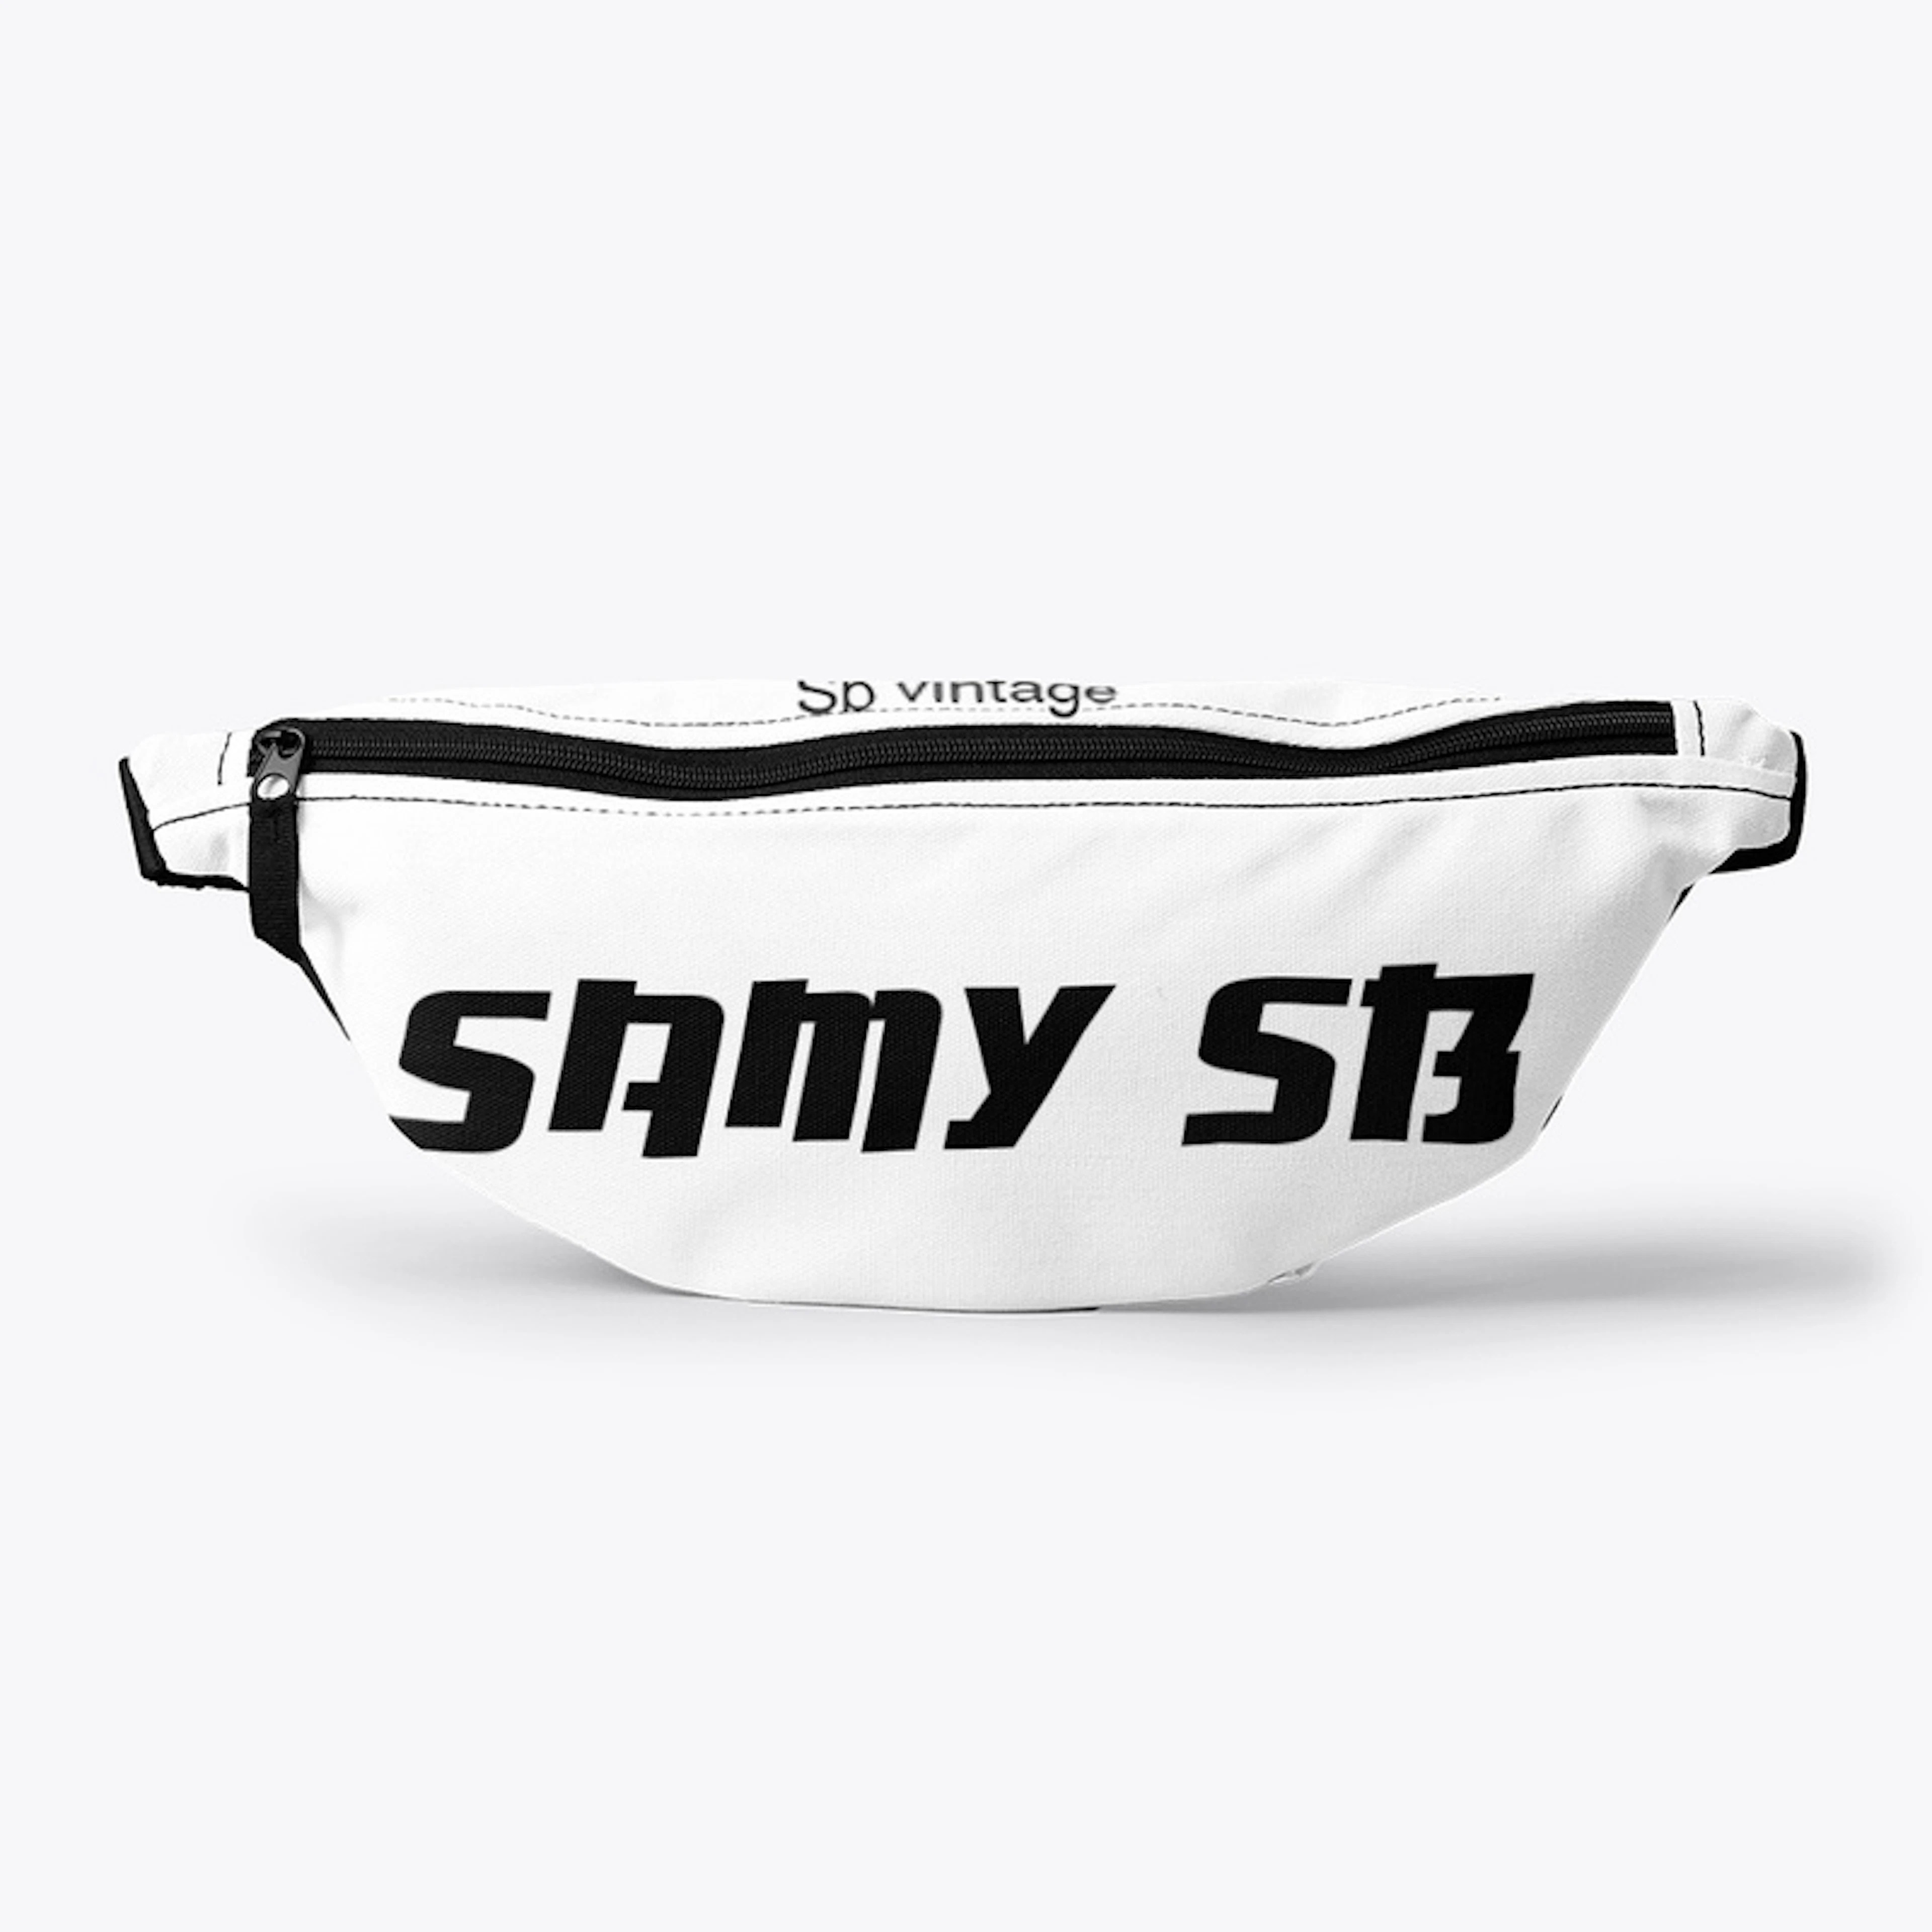 Samy sac 